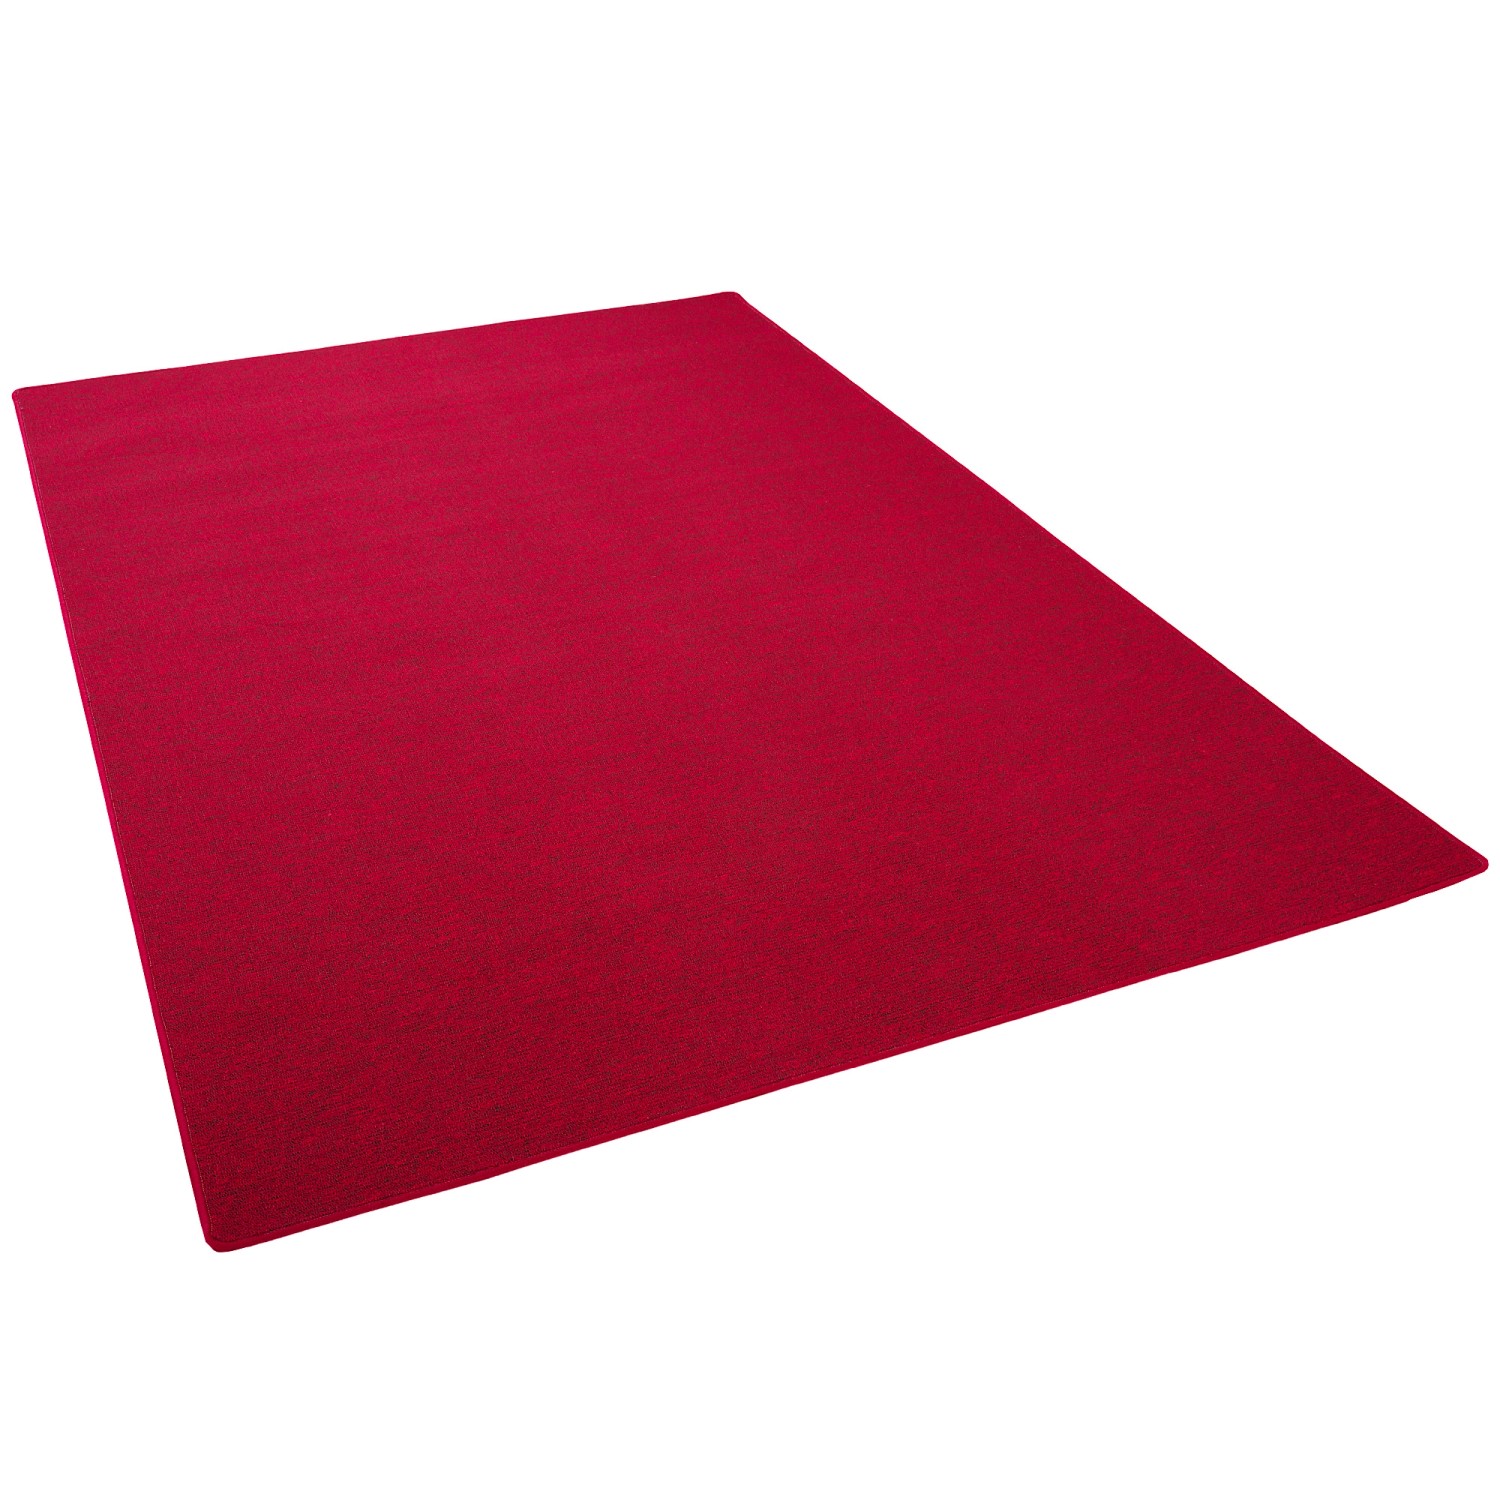 Snapstyle Feinschlingen Velour Teppich Strong Rot 140x200cm günstig online kaufen